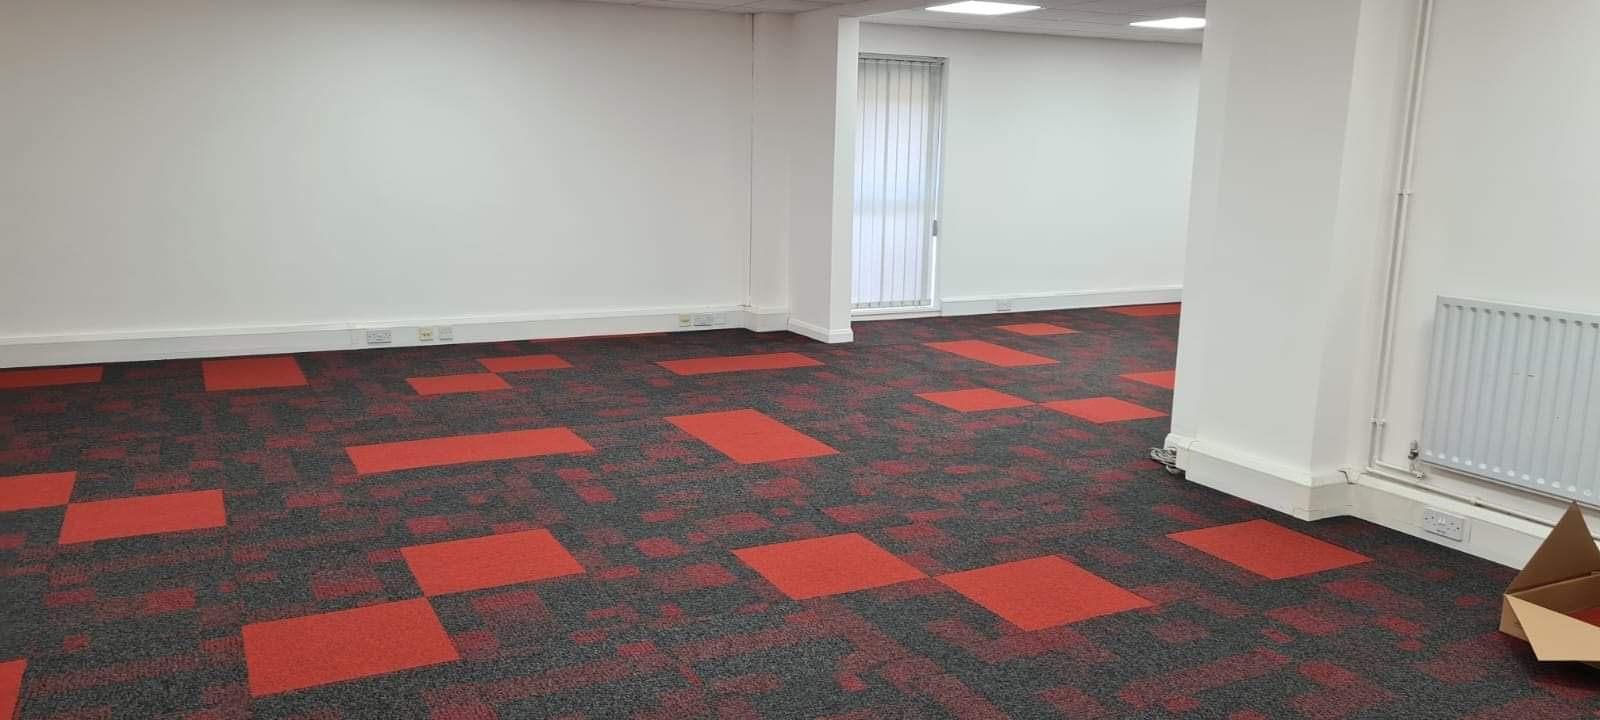 Images Level Up Flooring Ltd